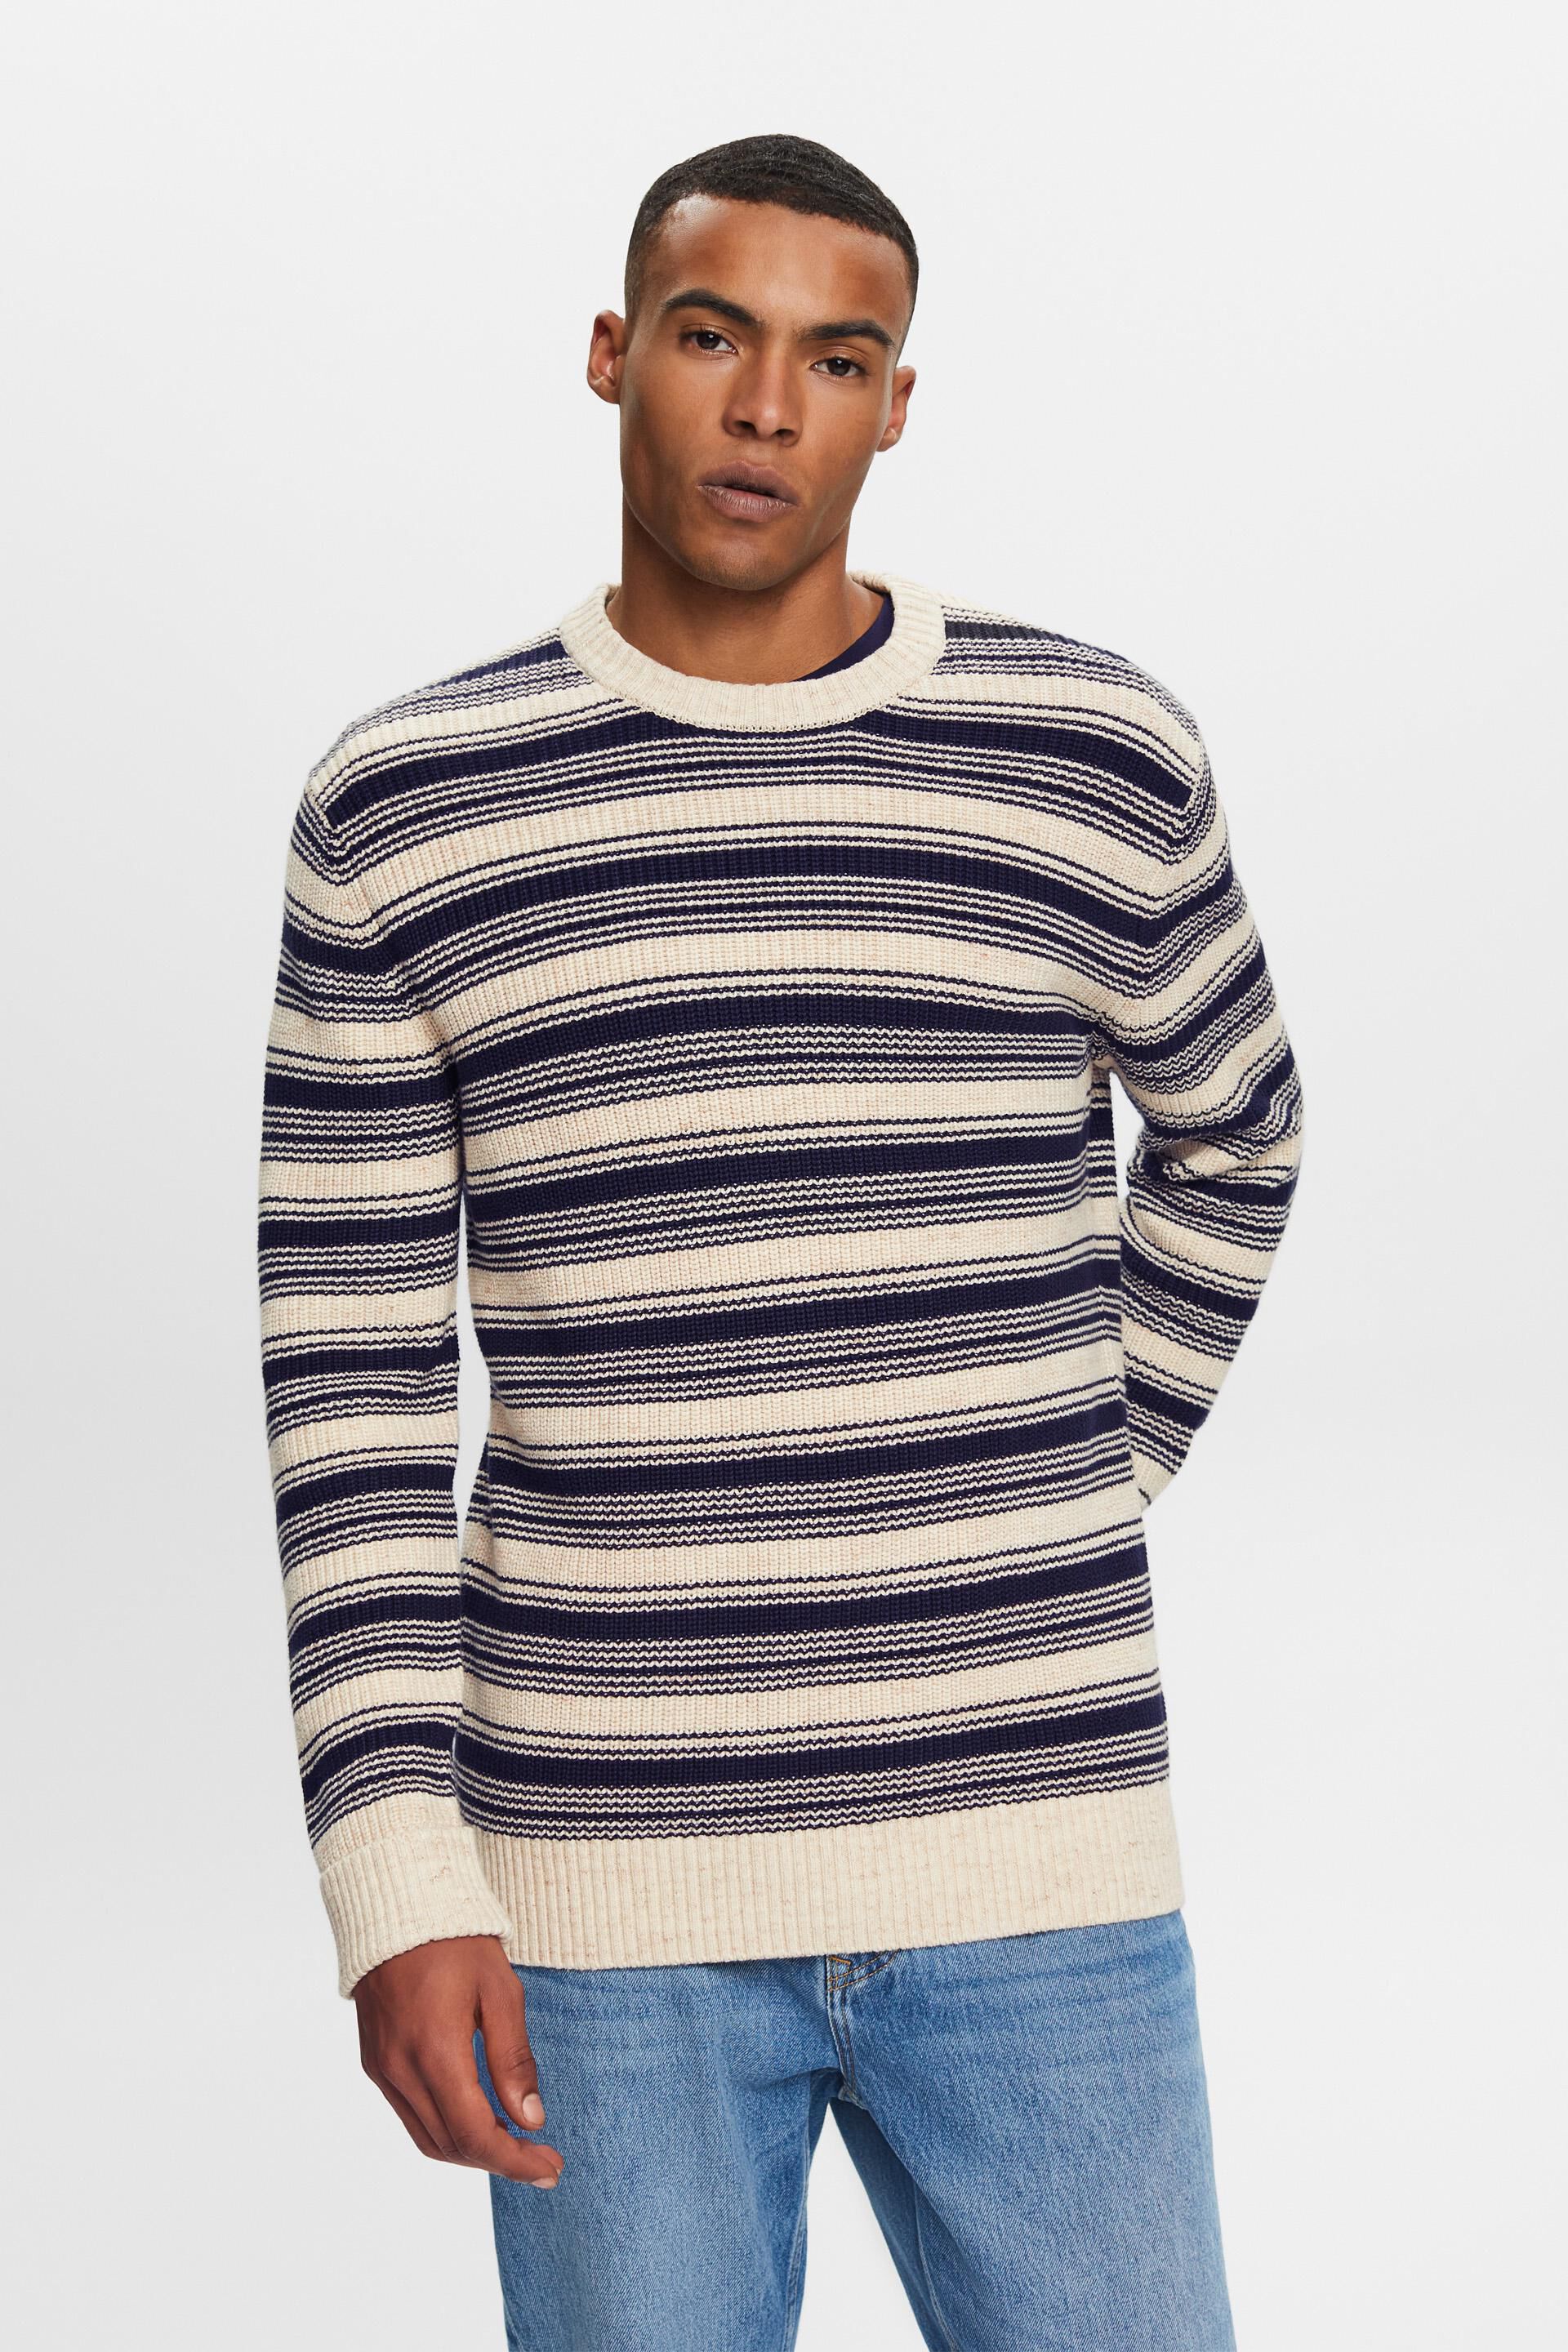 Esprit 100% cotton crewneck Striped jumper,